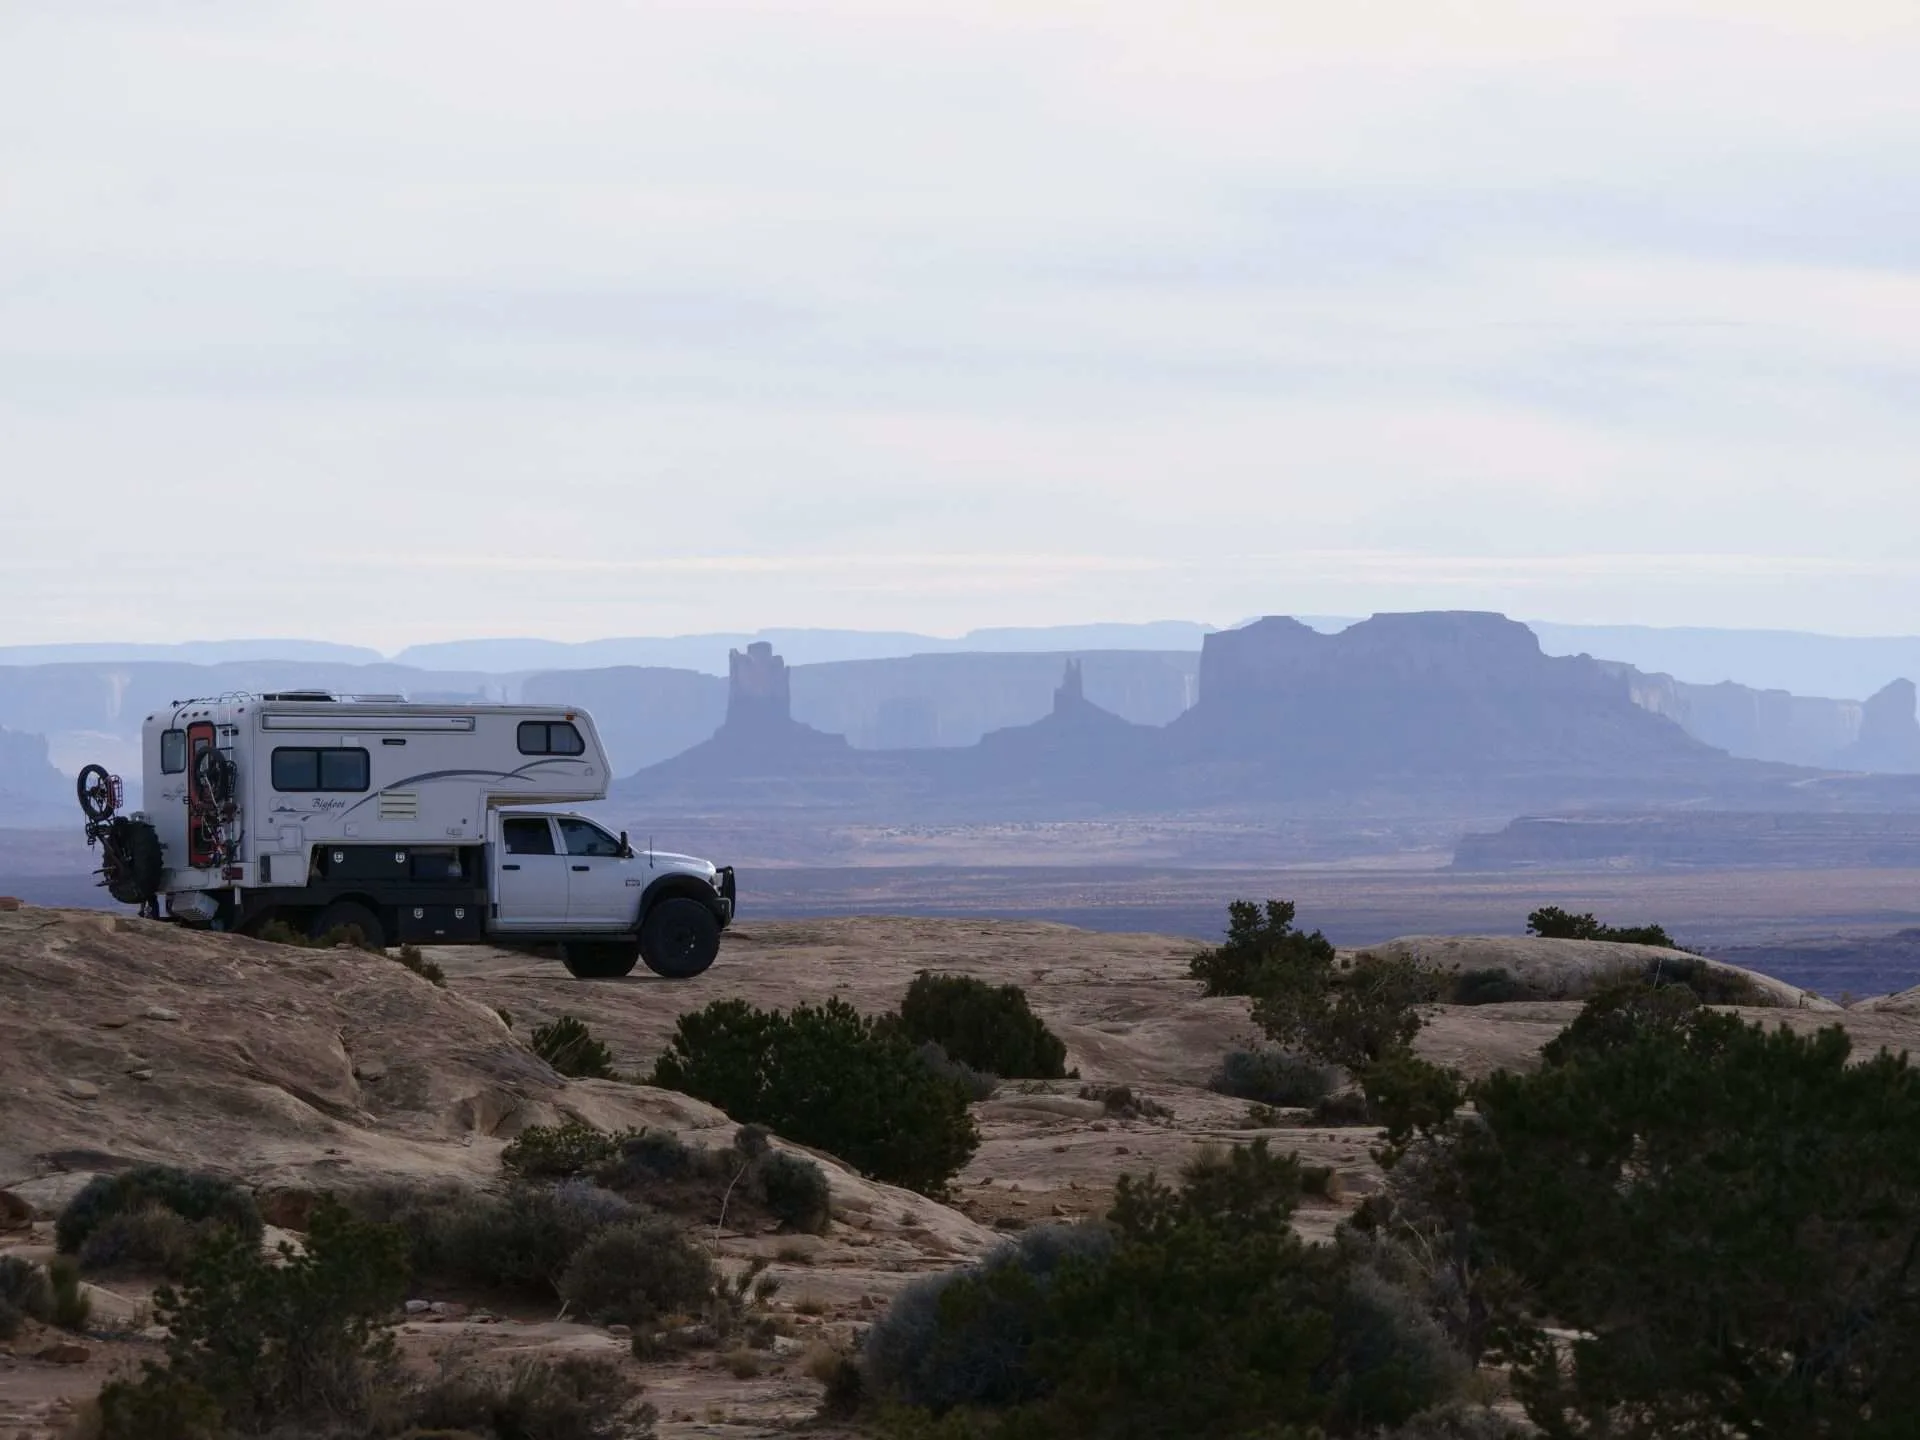 Truck camper overlanding in the desert